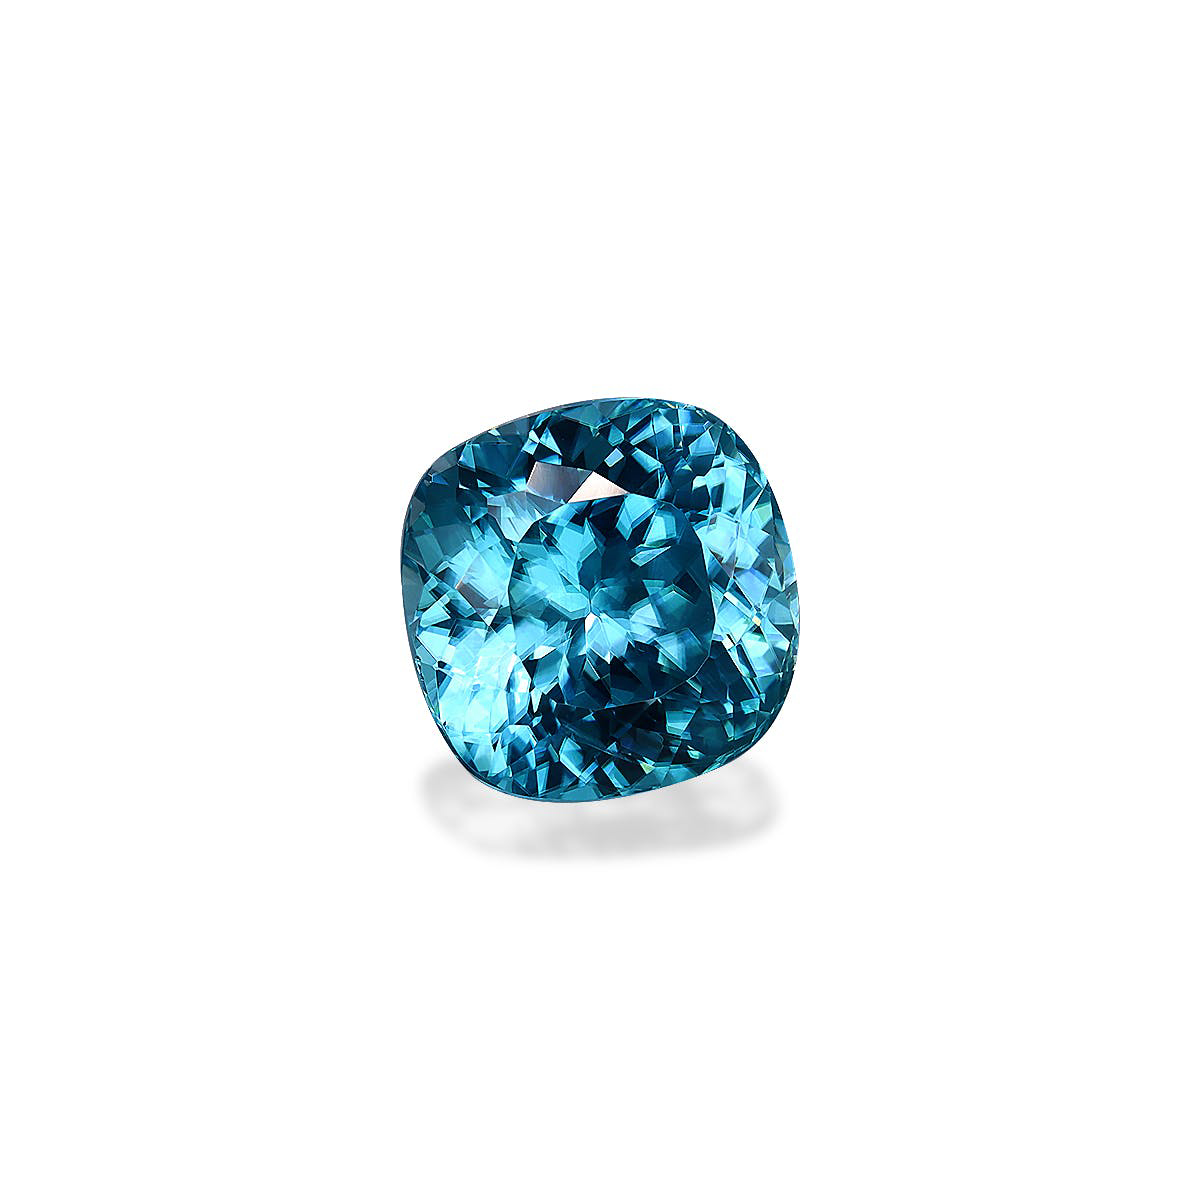 Picture of Mint Blue Zircon 10.69ct - 11mm (ZI0769)